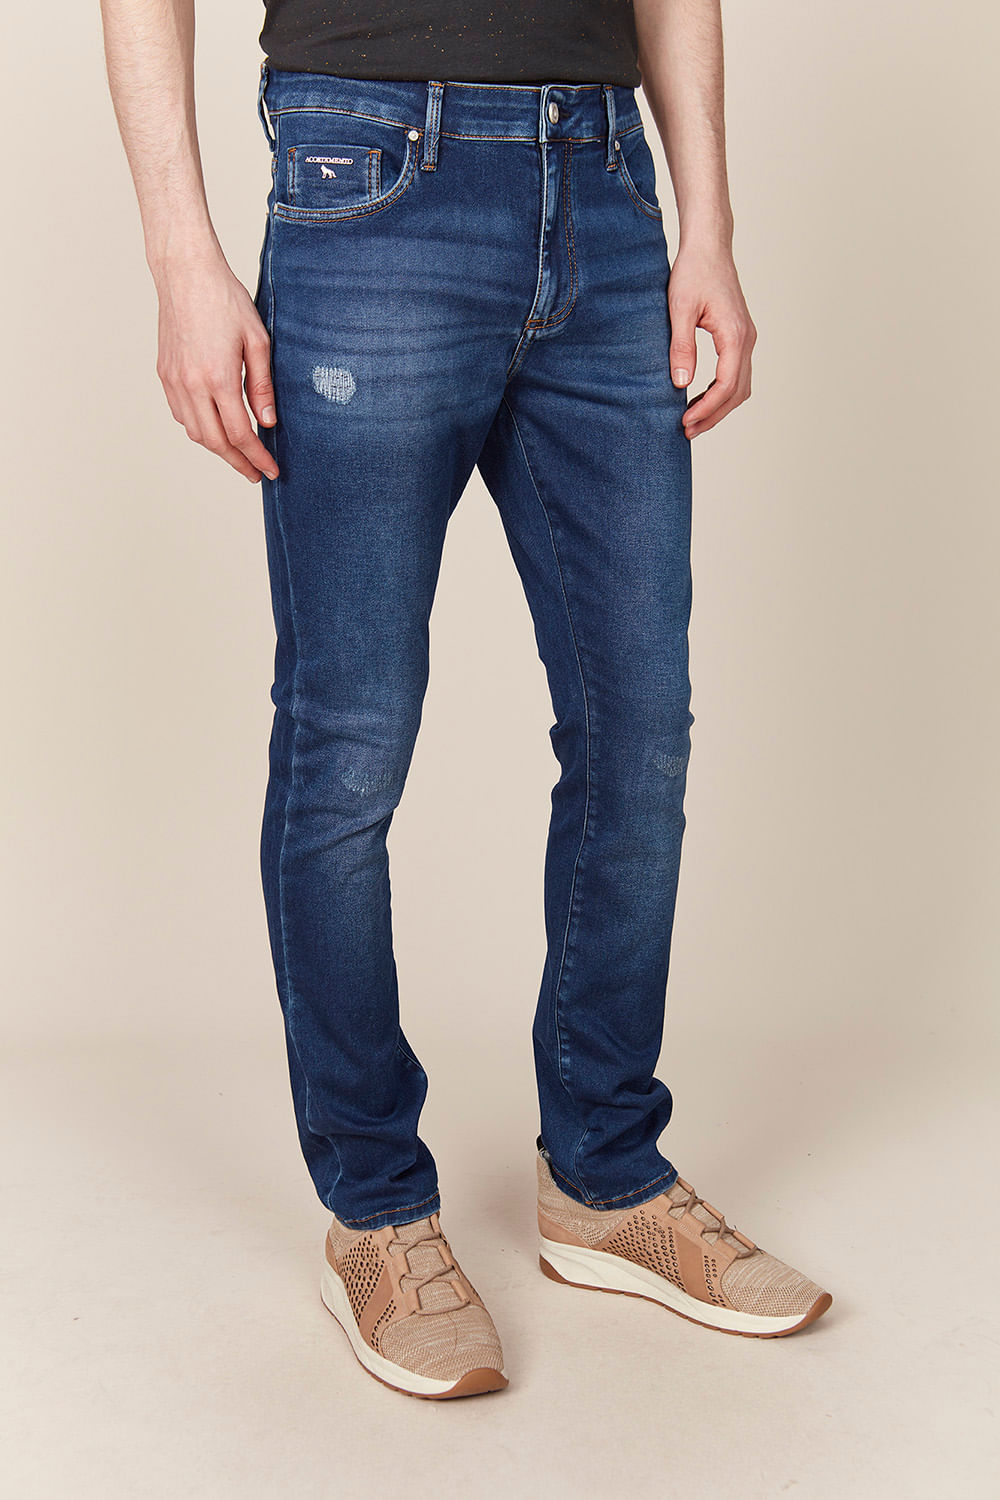 Calça Jeans Masculina Skinny New Urban Acostamento